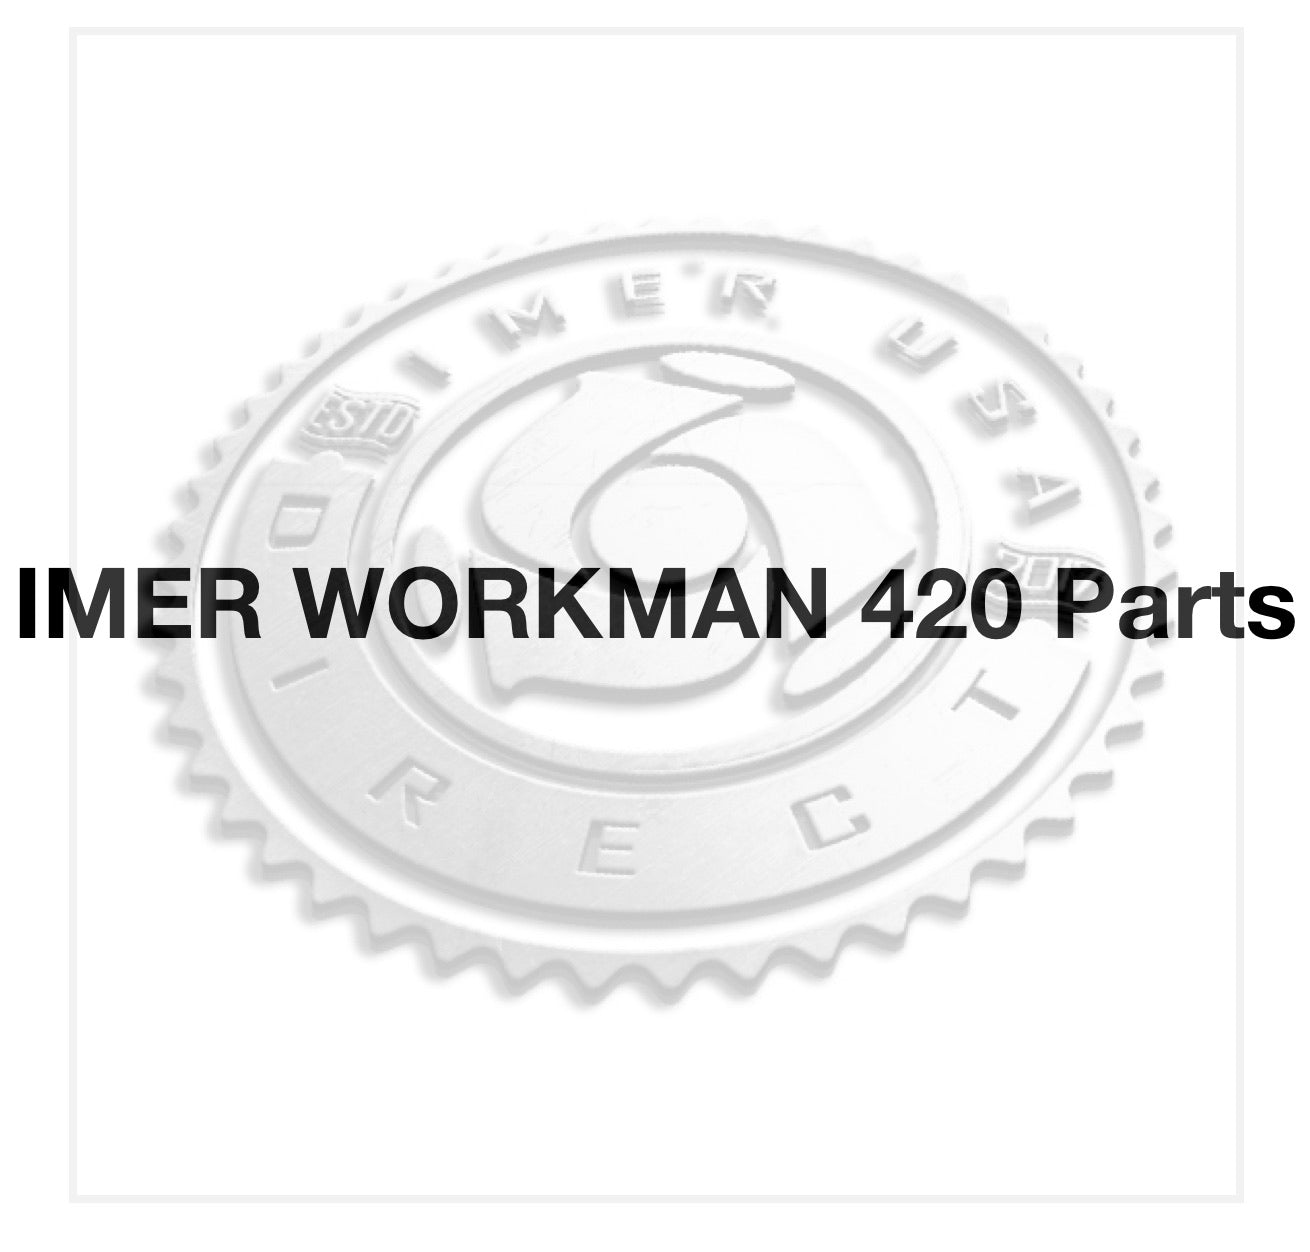 PN 3209921 - Pulley - IMER Workman 420 Mixer